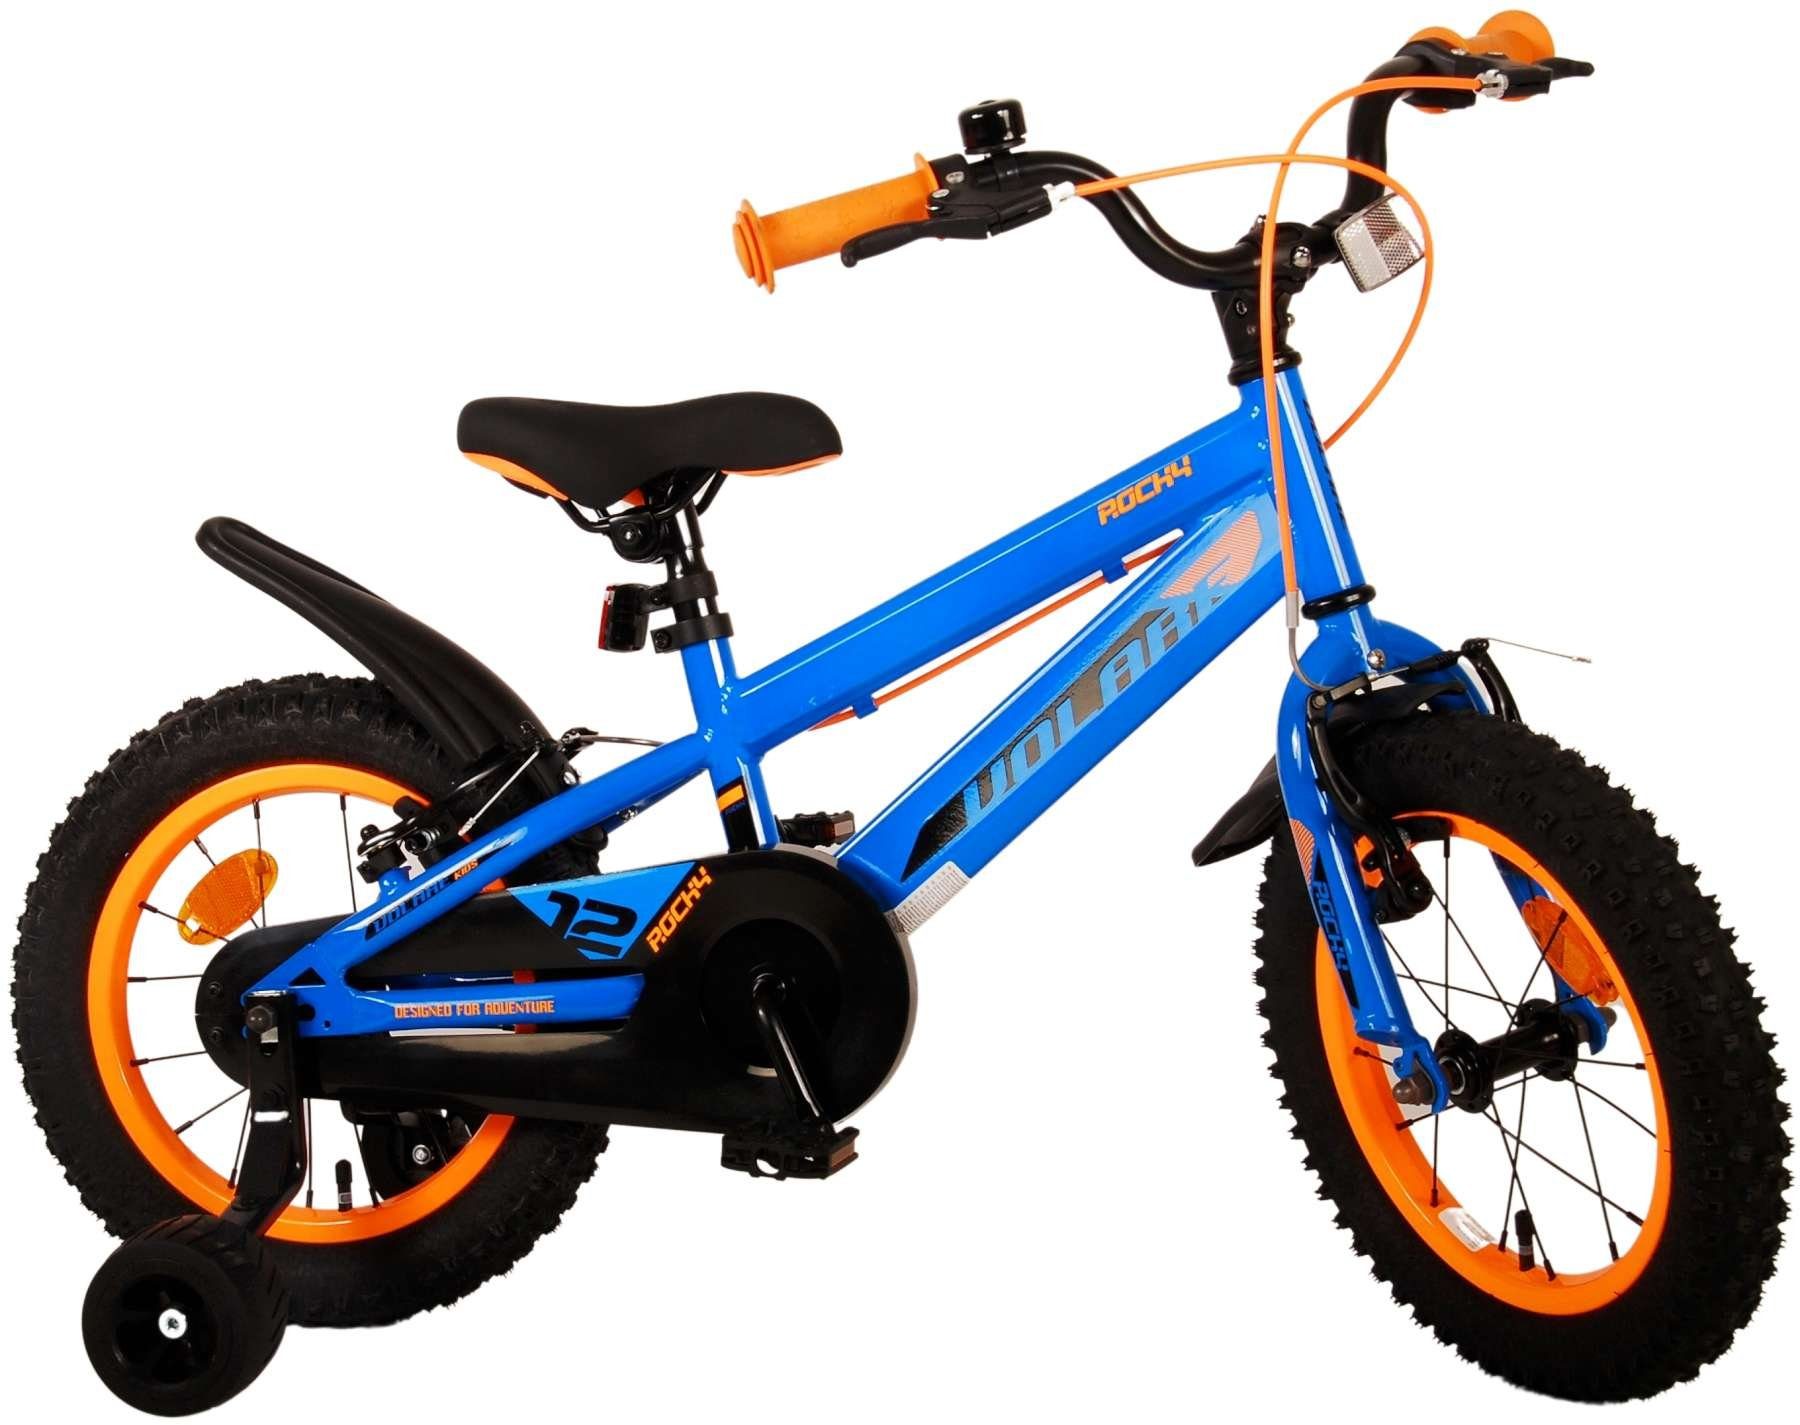 PROMETHEUS BICYCLES® HAWK Kinderfahrrad 14 , Blau-Schwarz mit